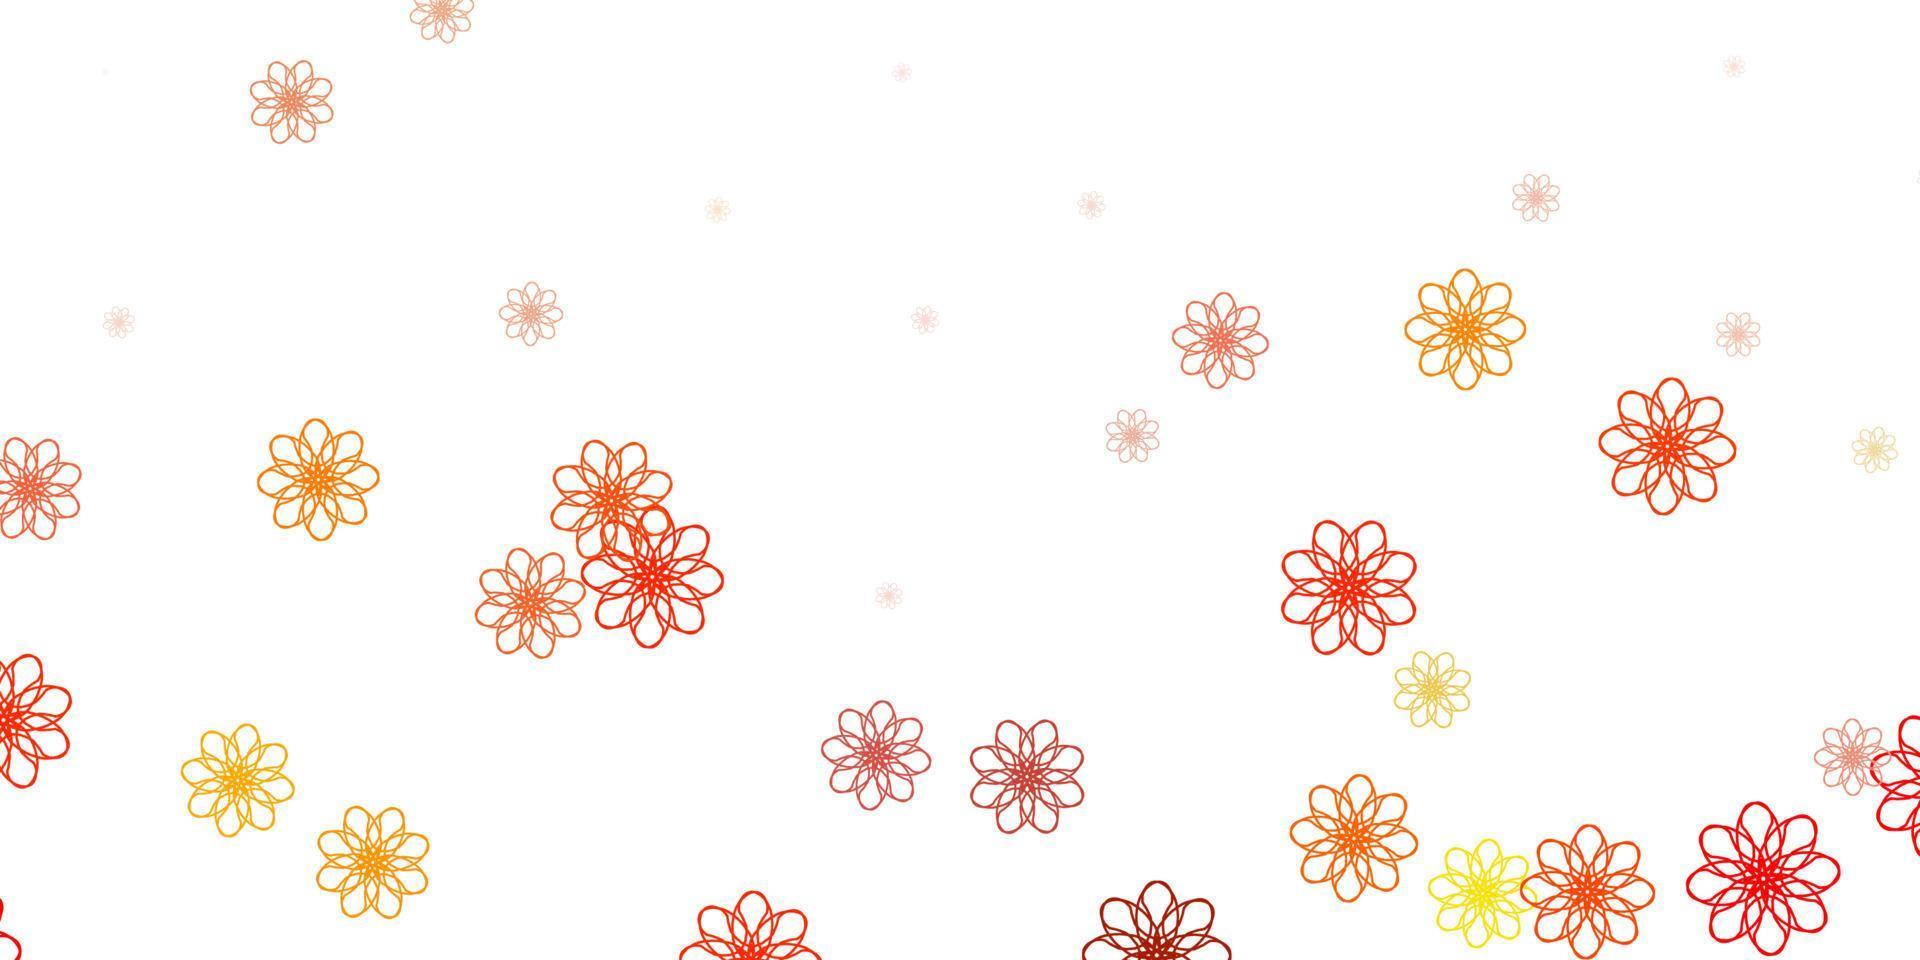 Textura de doodle de vector naranja claro con flores.